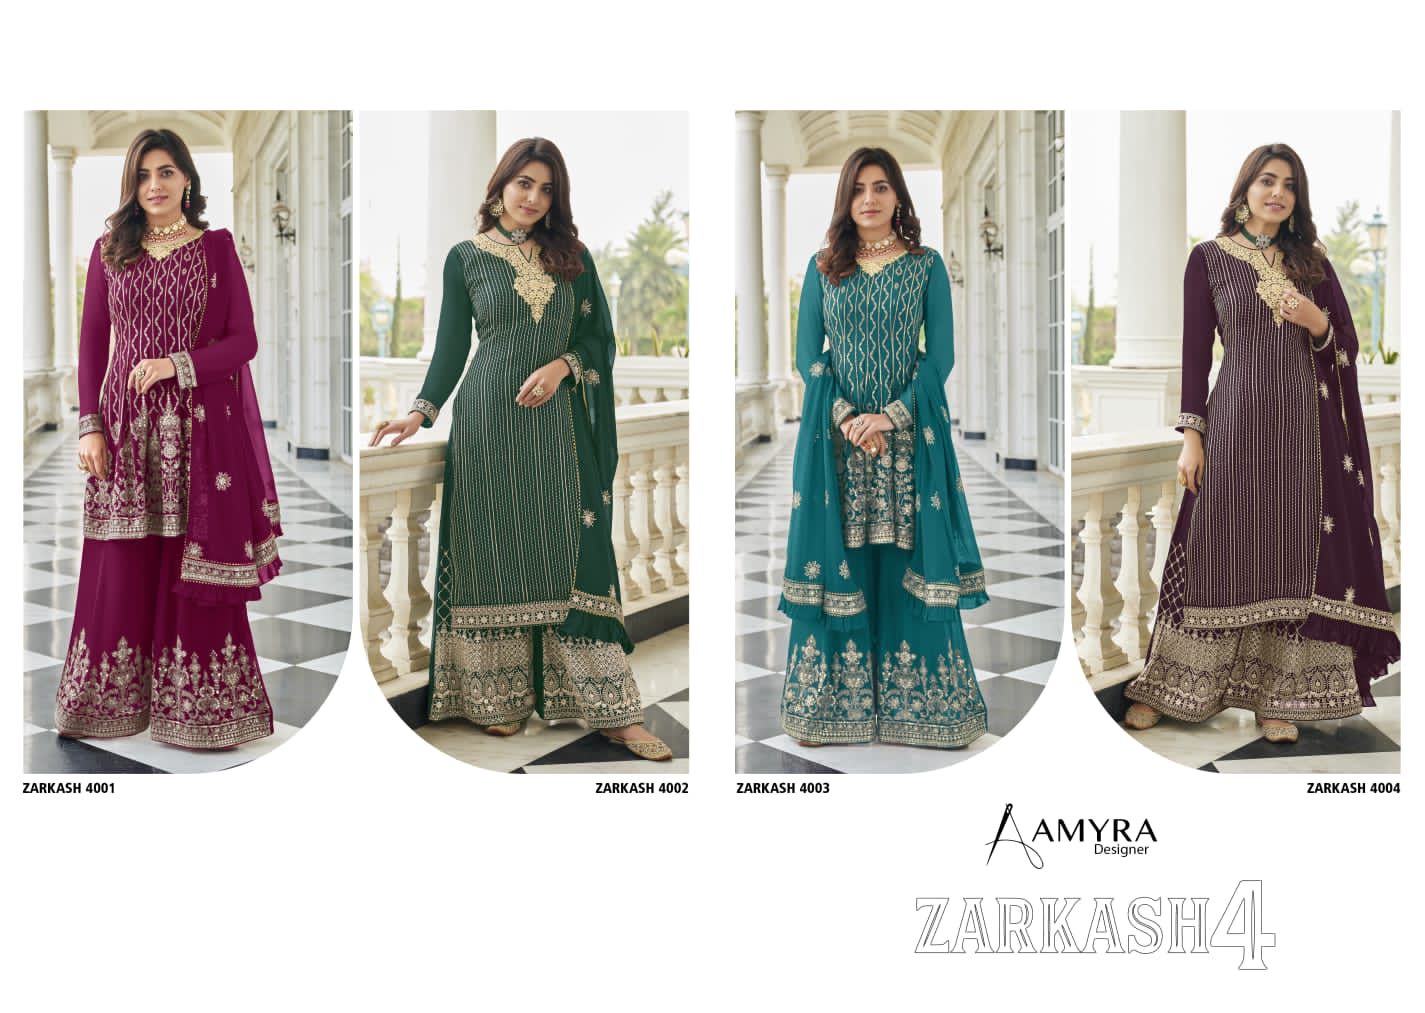 Amyra Zarkash 4 collection 4